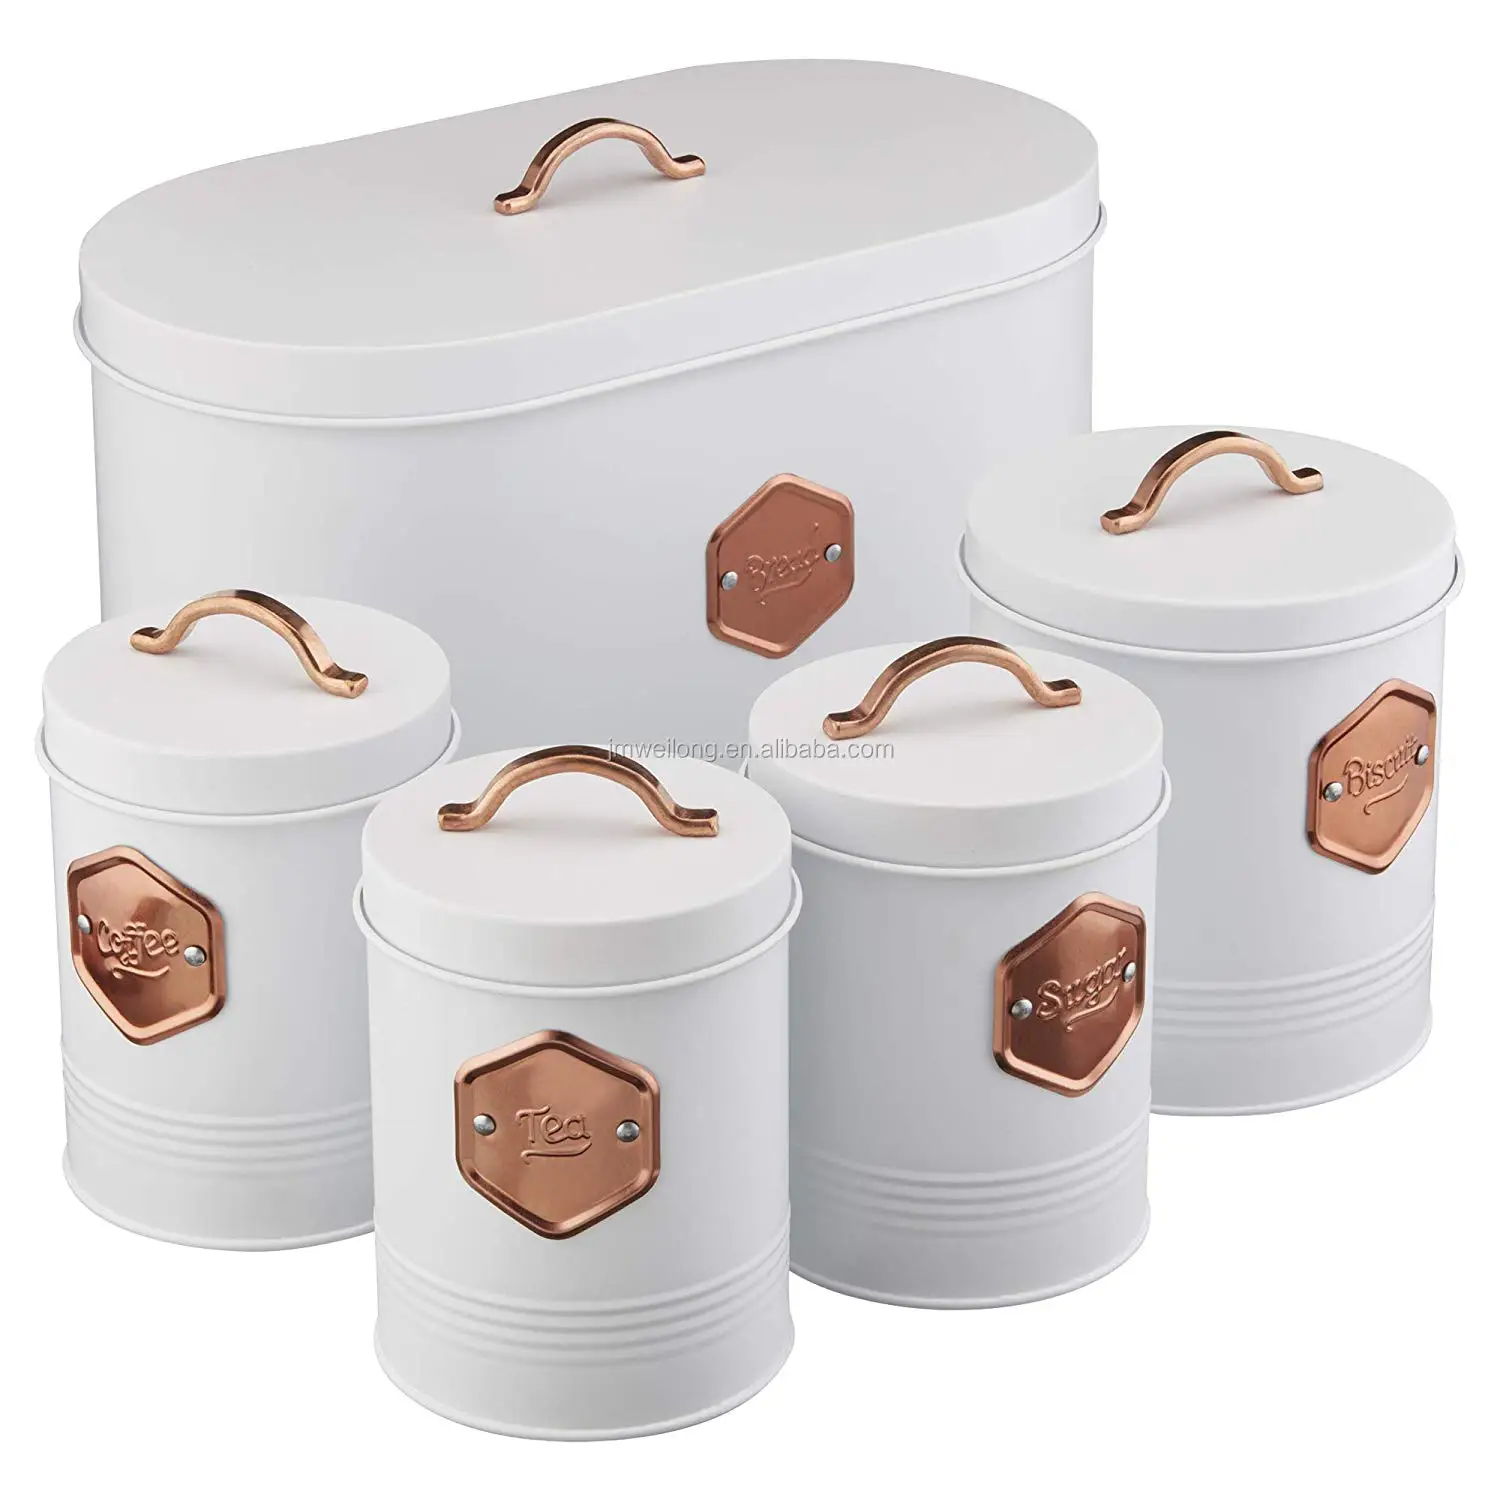 5 Piece Ceramic Storage Set Bistro Kitchen Coffee Sugar Tea Food Canisters New 